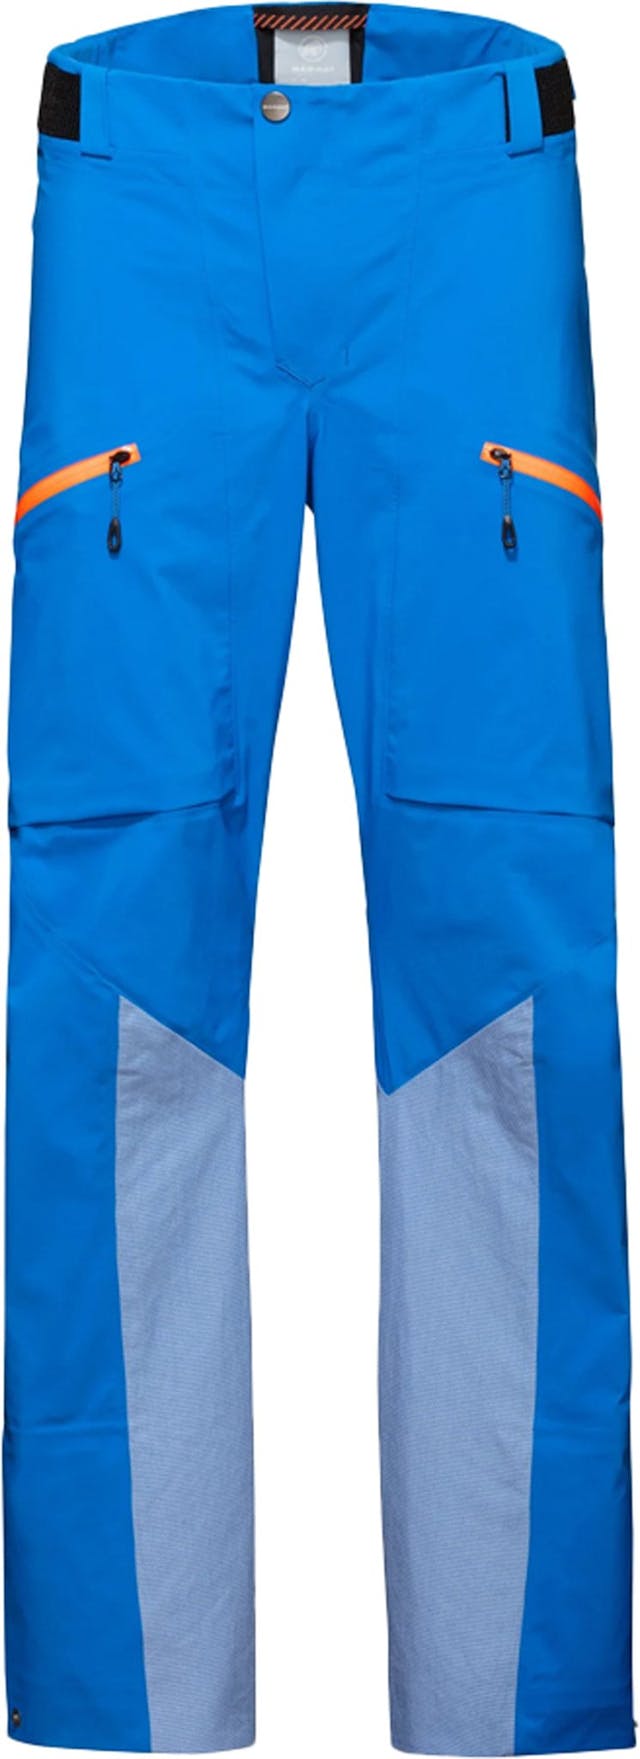 Product image for La Liste Hardshell Pants - Men's